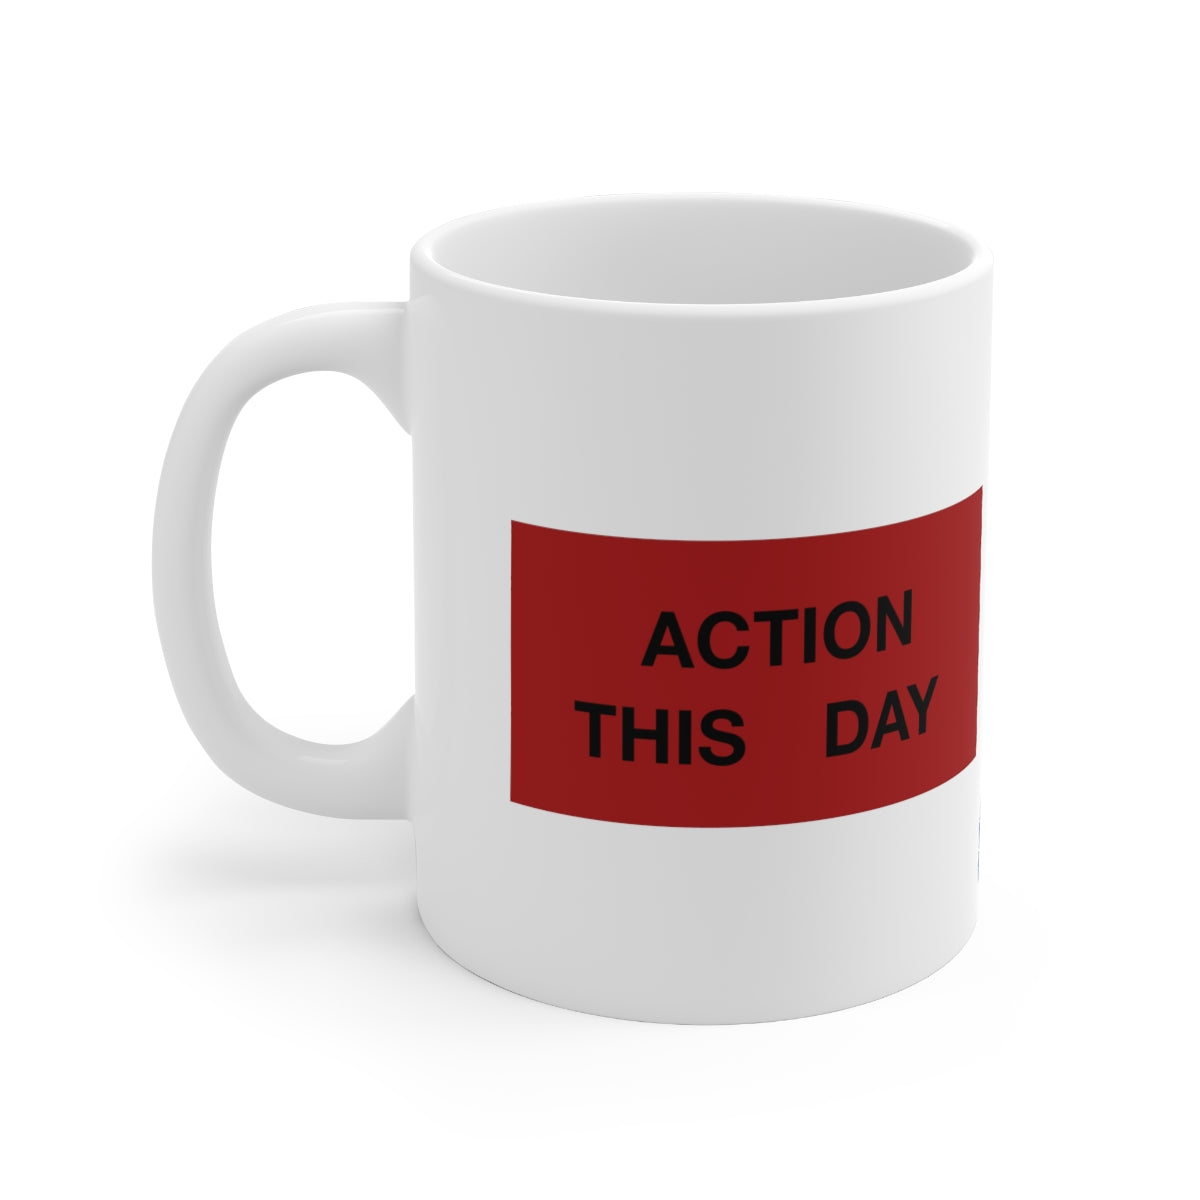 ACTION THIS DAY Ceramic Mug